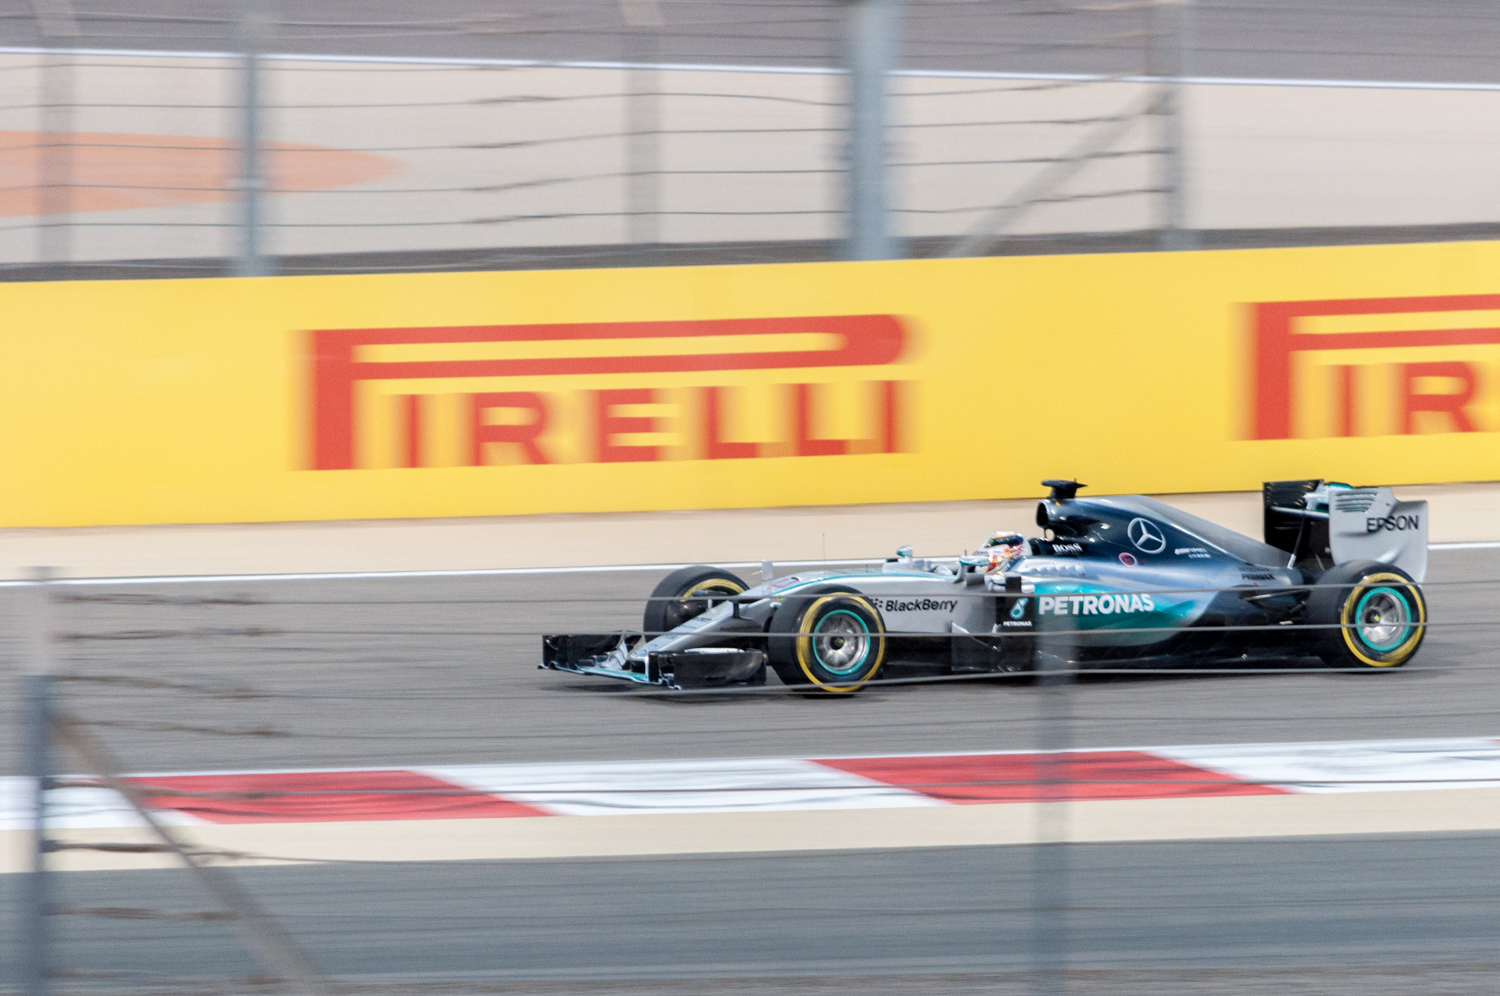 Bahrain GP - Lewis Hamilton